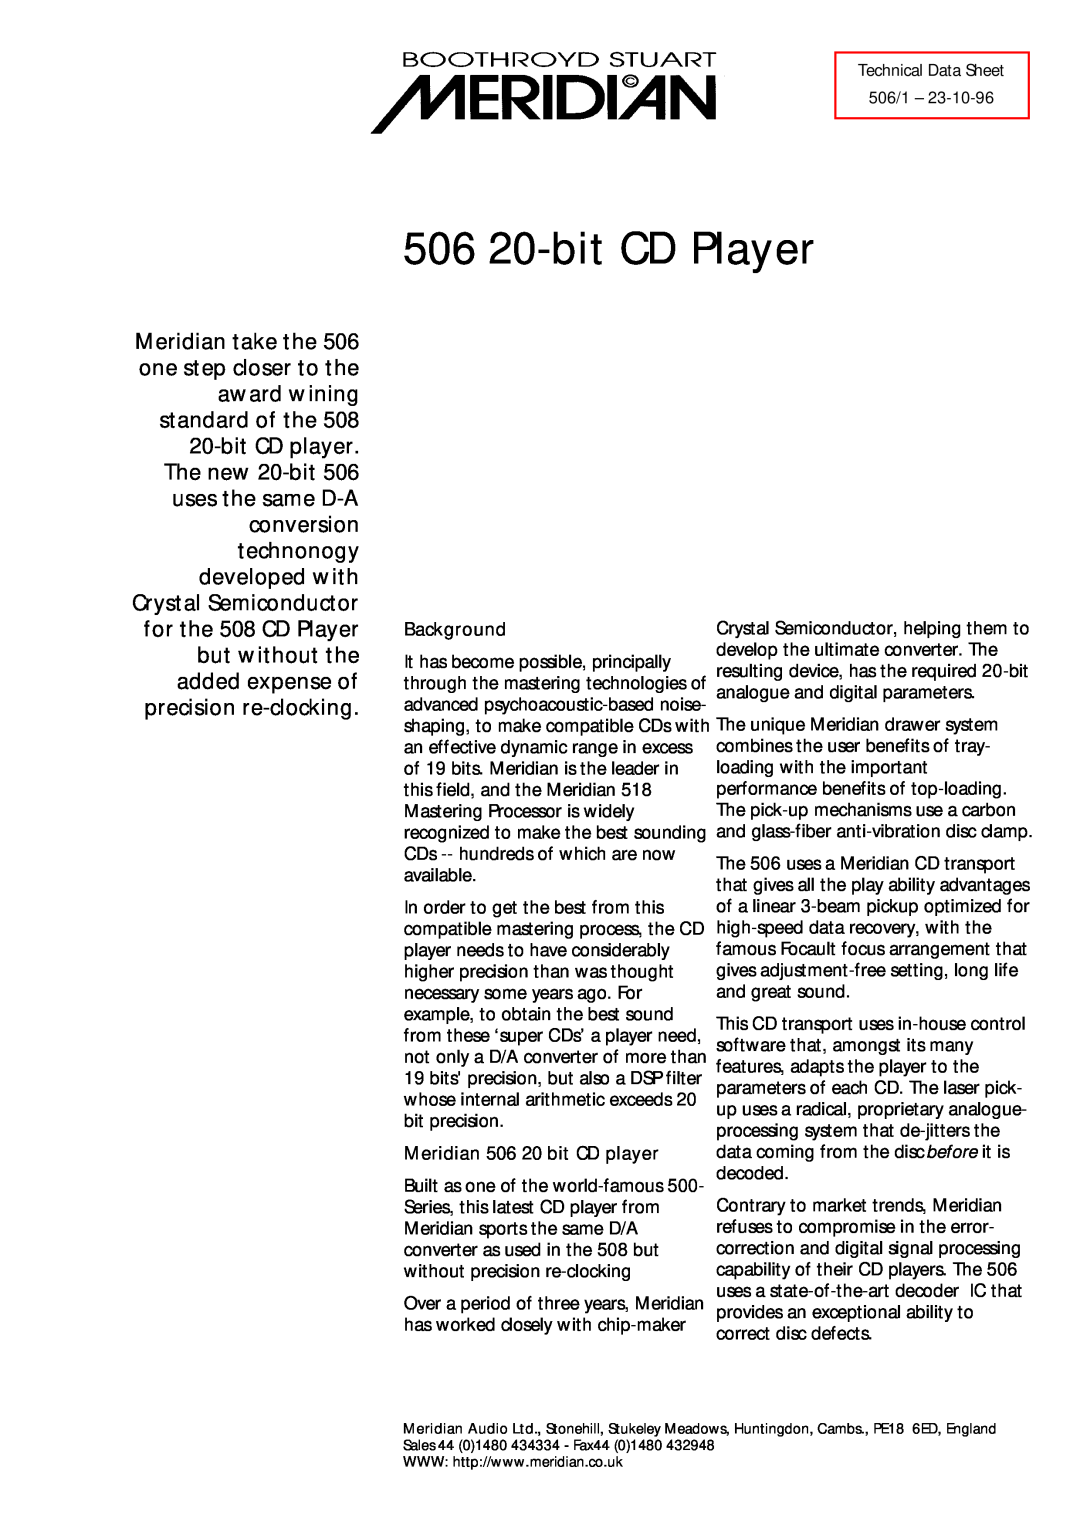 Meridian America 506/1 manual Background, Meridian 506 20 bit CD player, 506 20-bitCD Player 